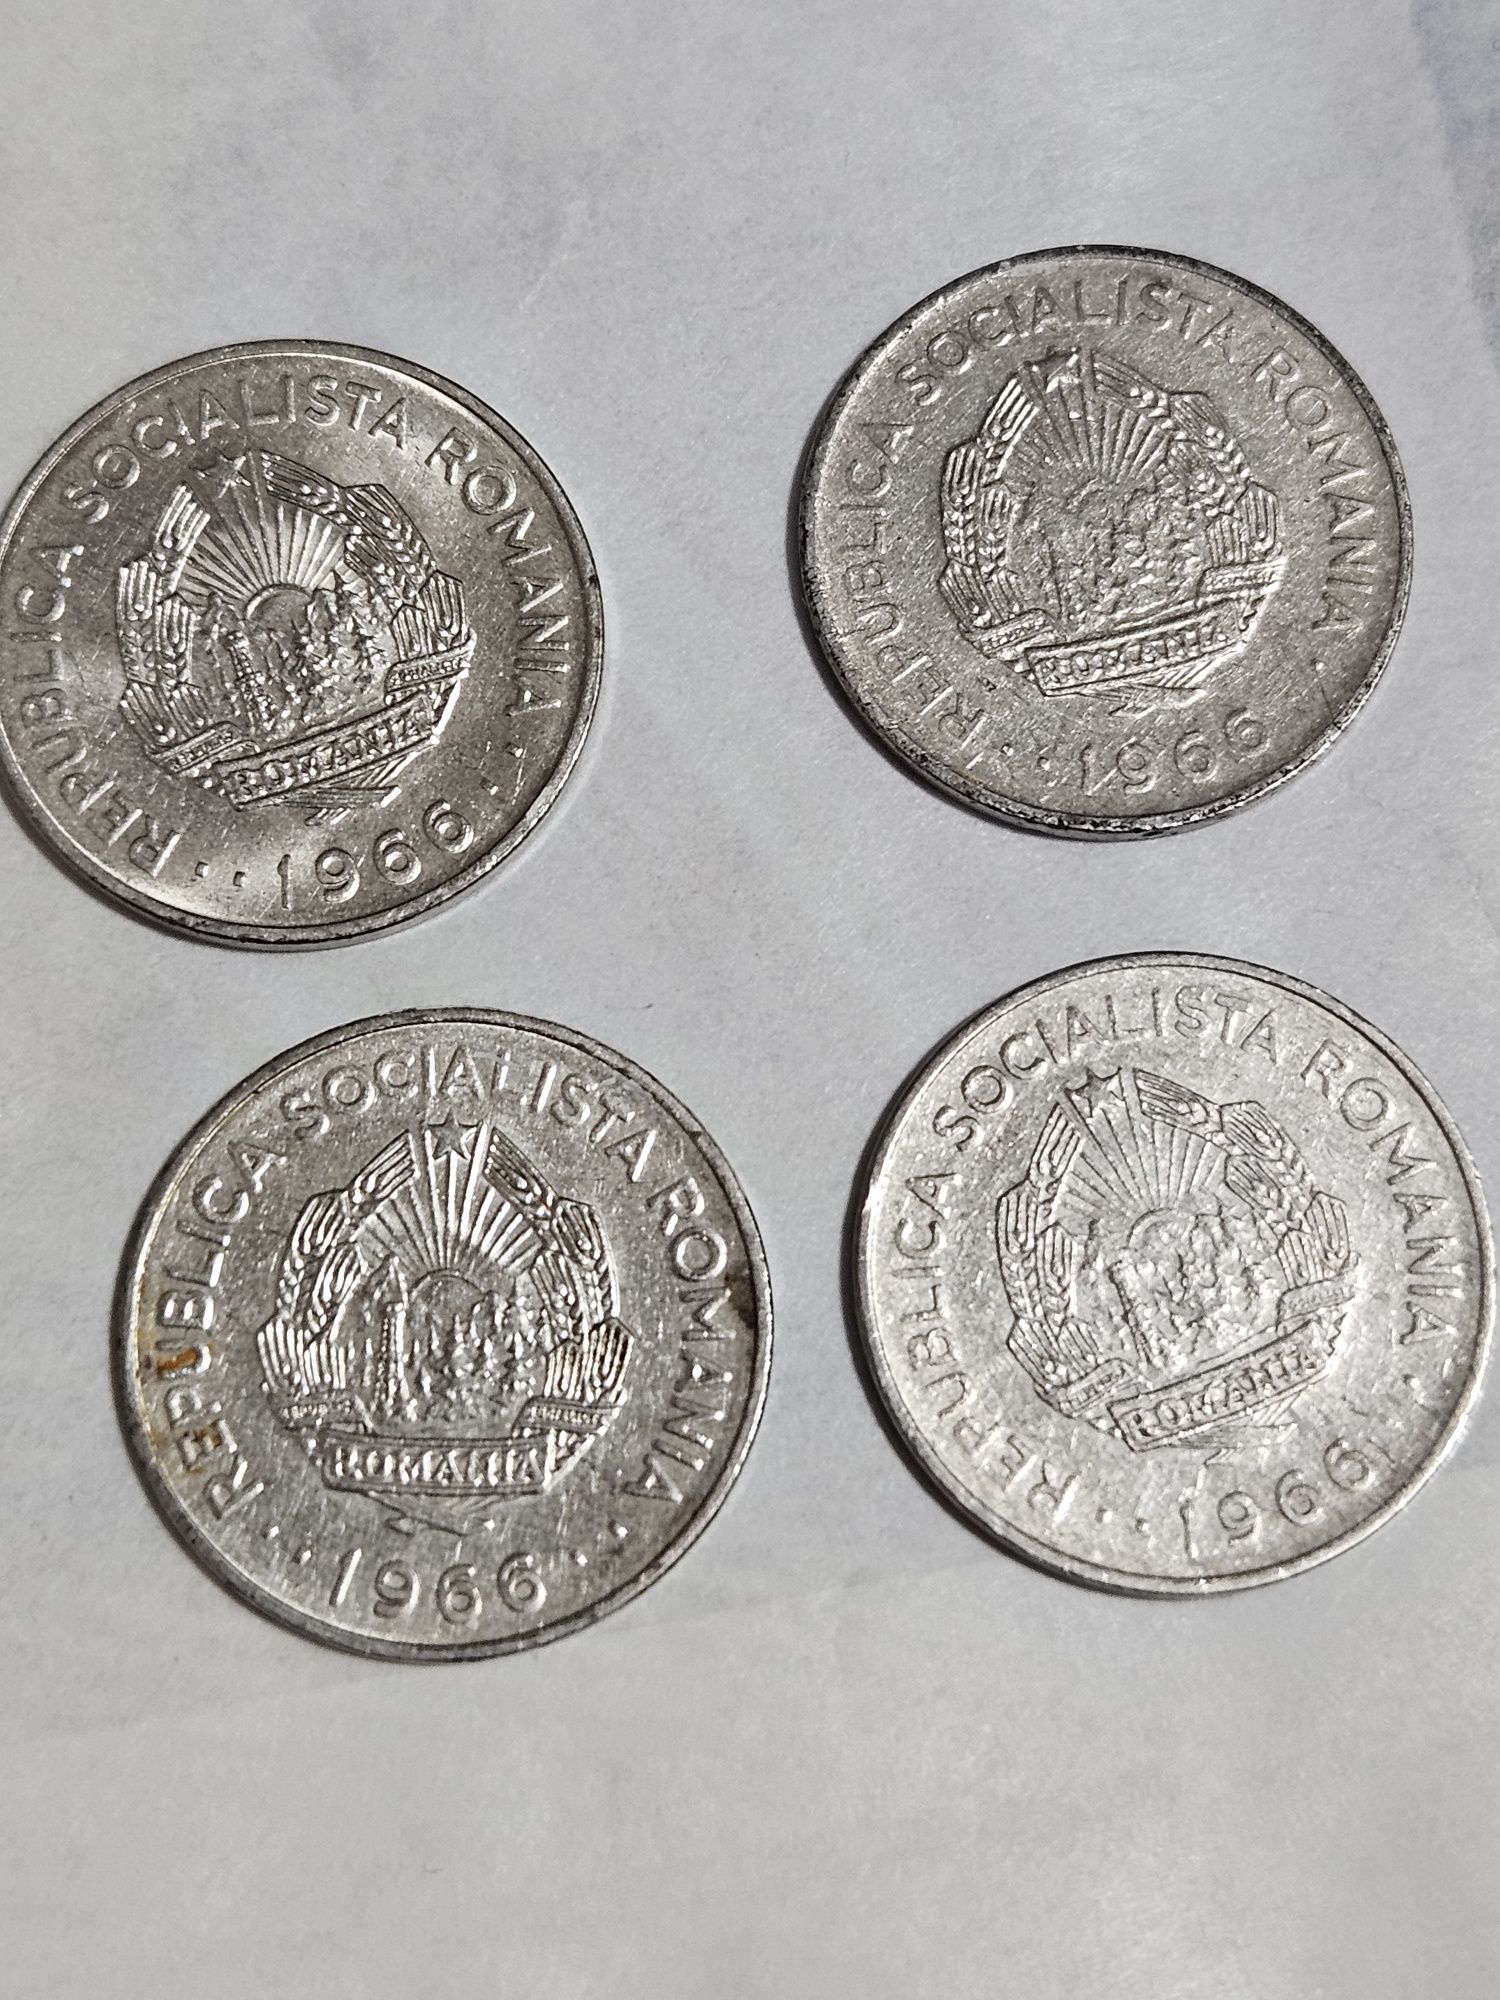 Vand 4 monezi de 1 leu din 1966 la 1500ron toate